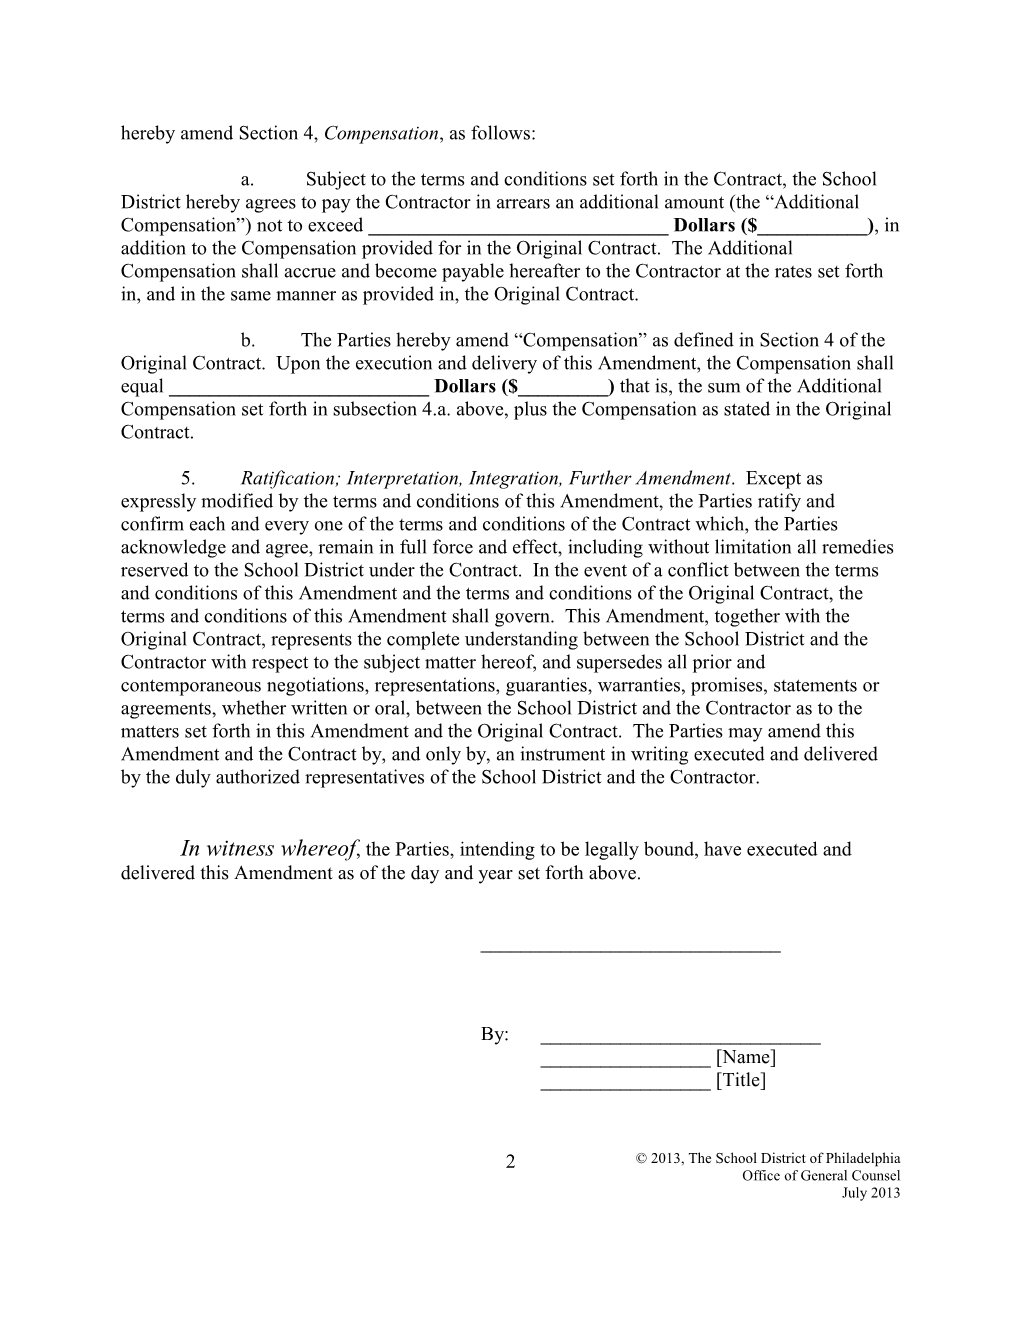 Amendment to Agreement